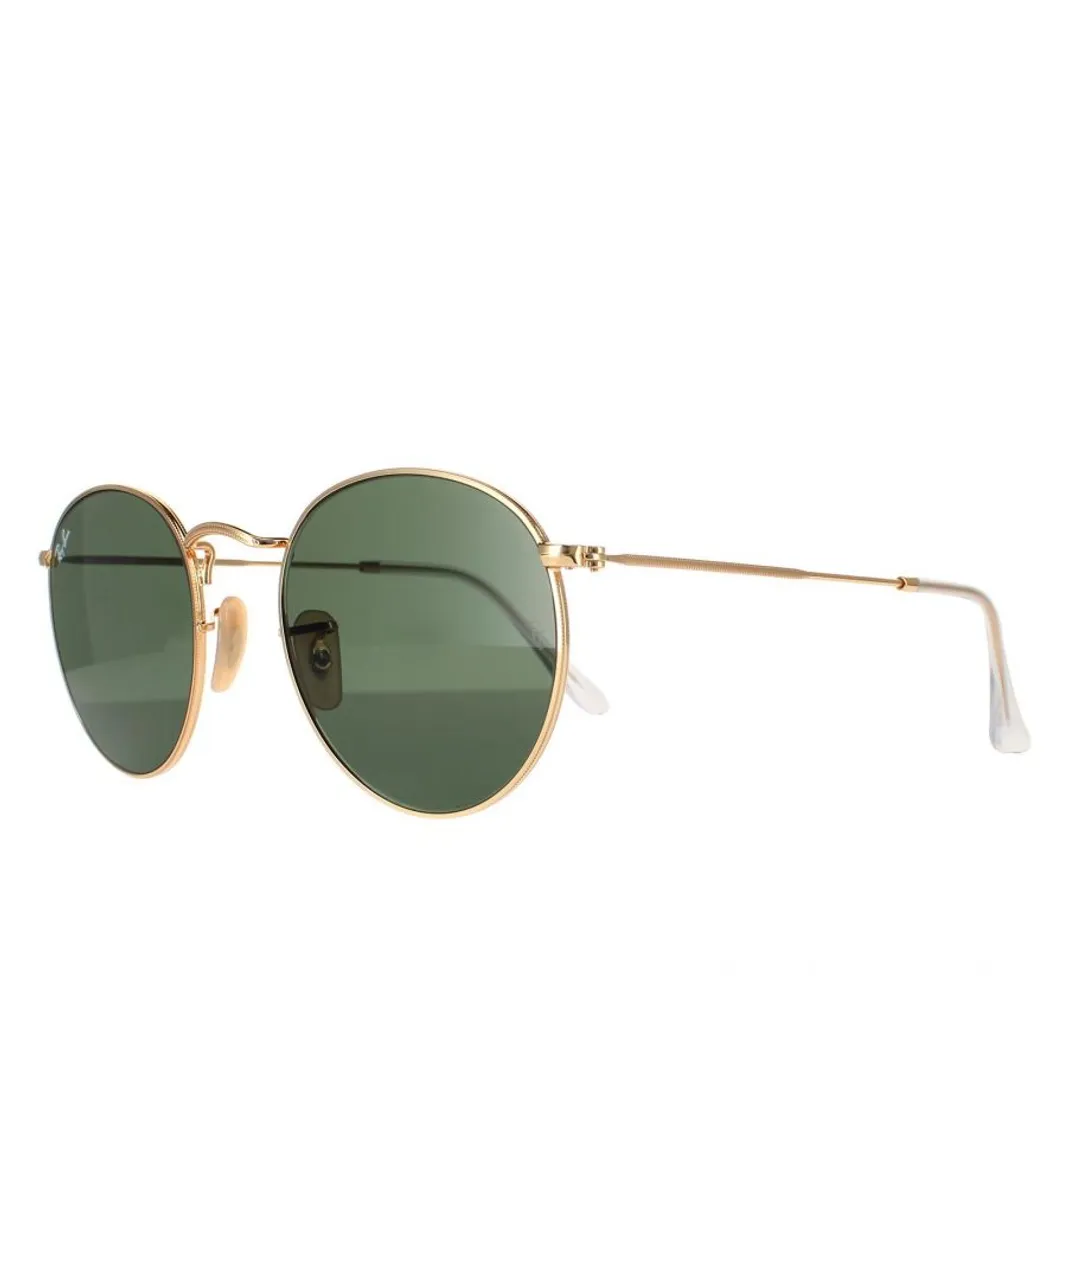 Ray-Ban Round Mens Arista G-15 Green Metal Sunglasses Flat Lenses 3447N - Gold - One